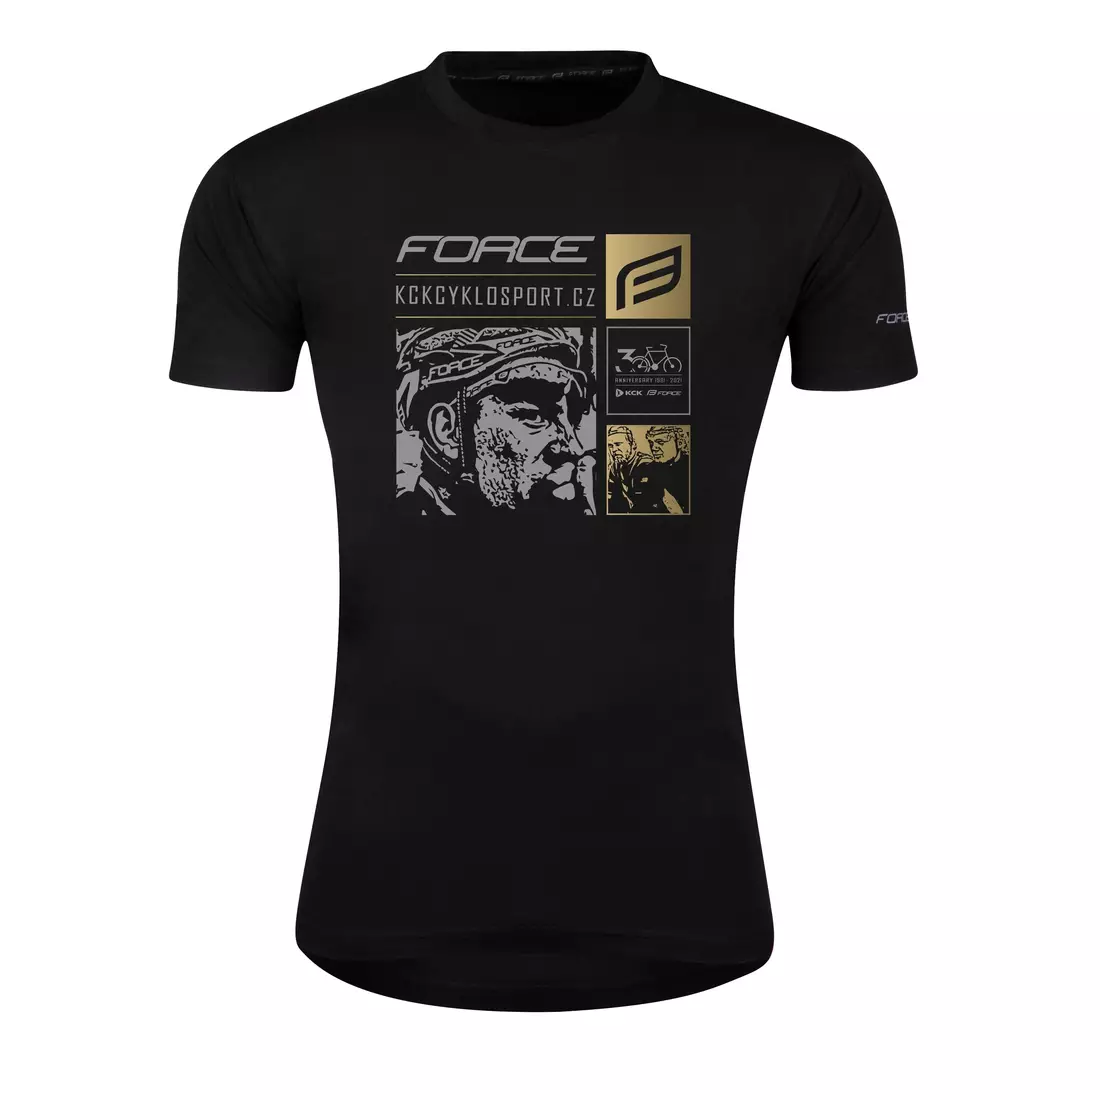 FORCE sport T-shirt 30 YEARS, black 